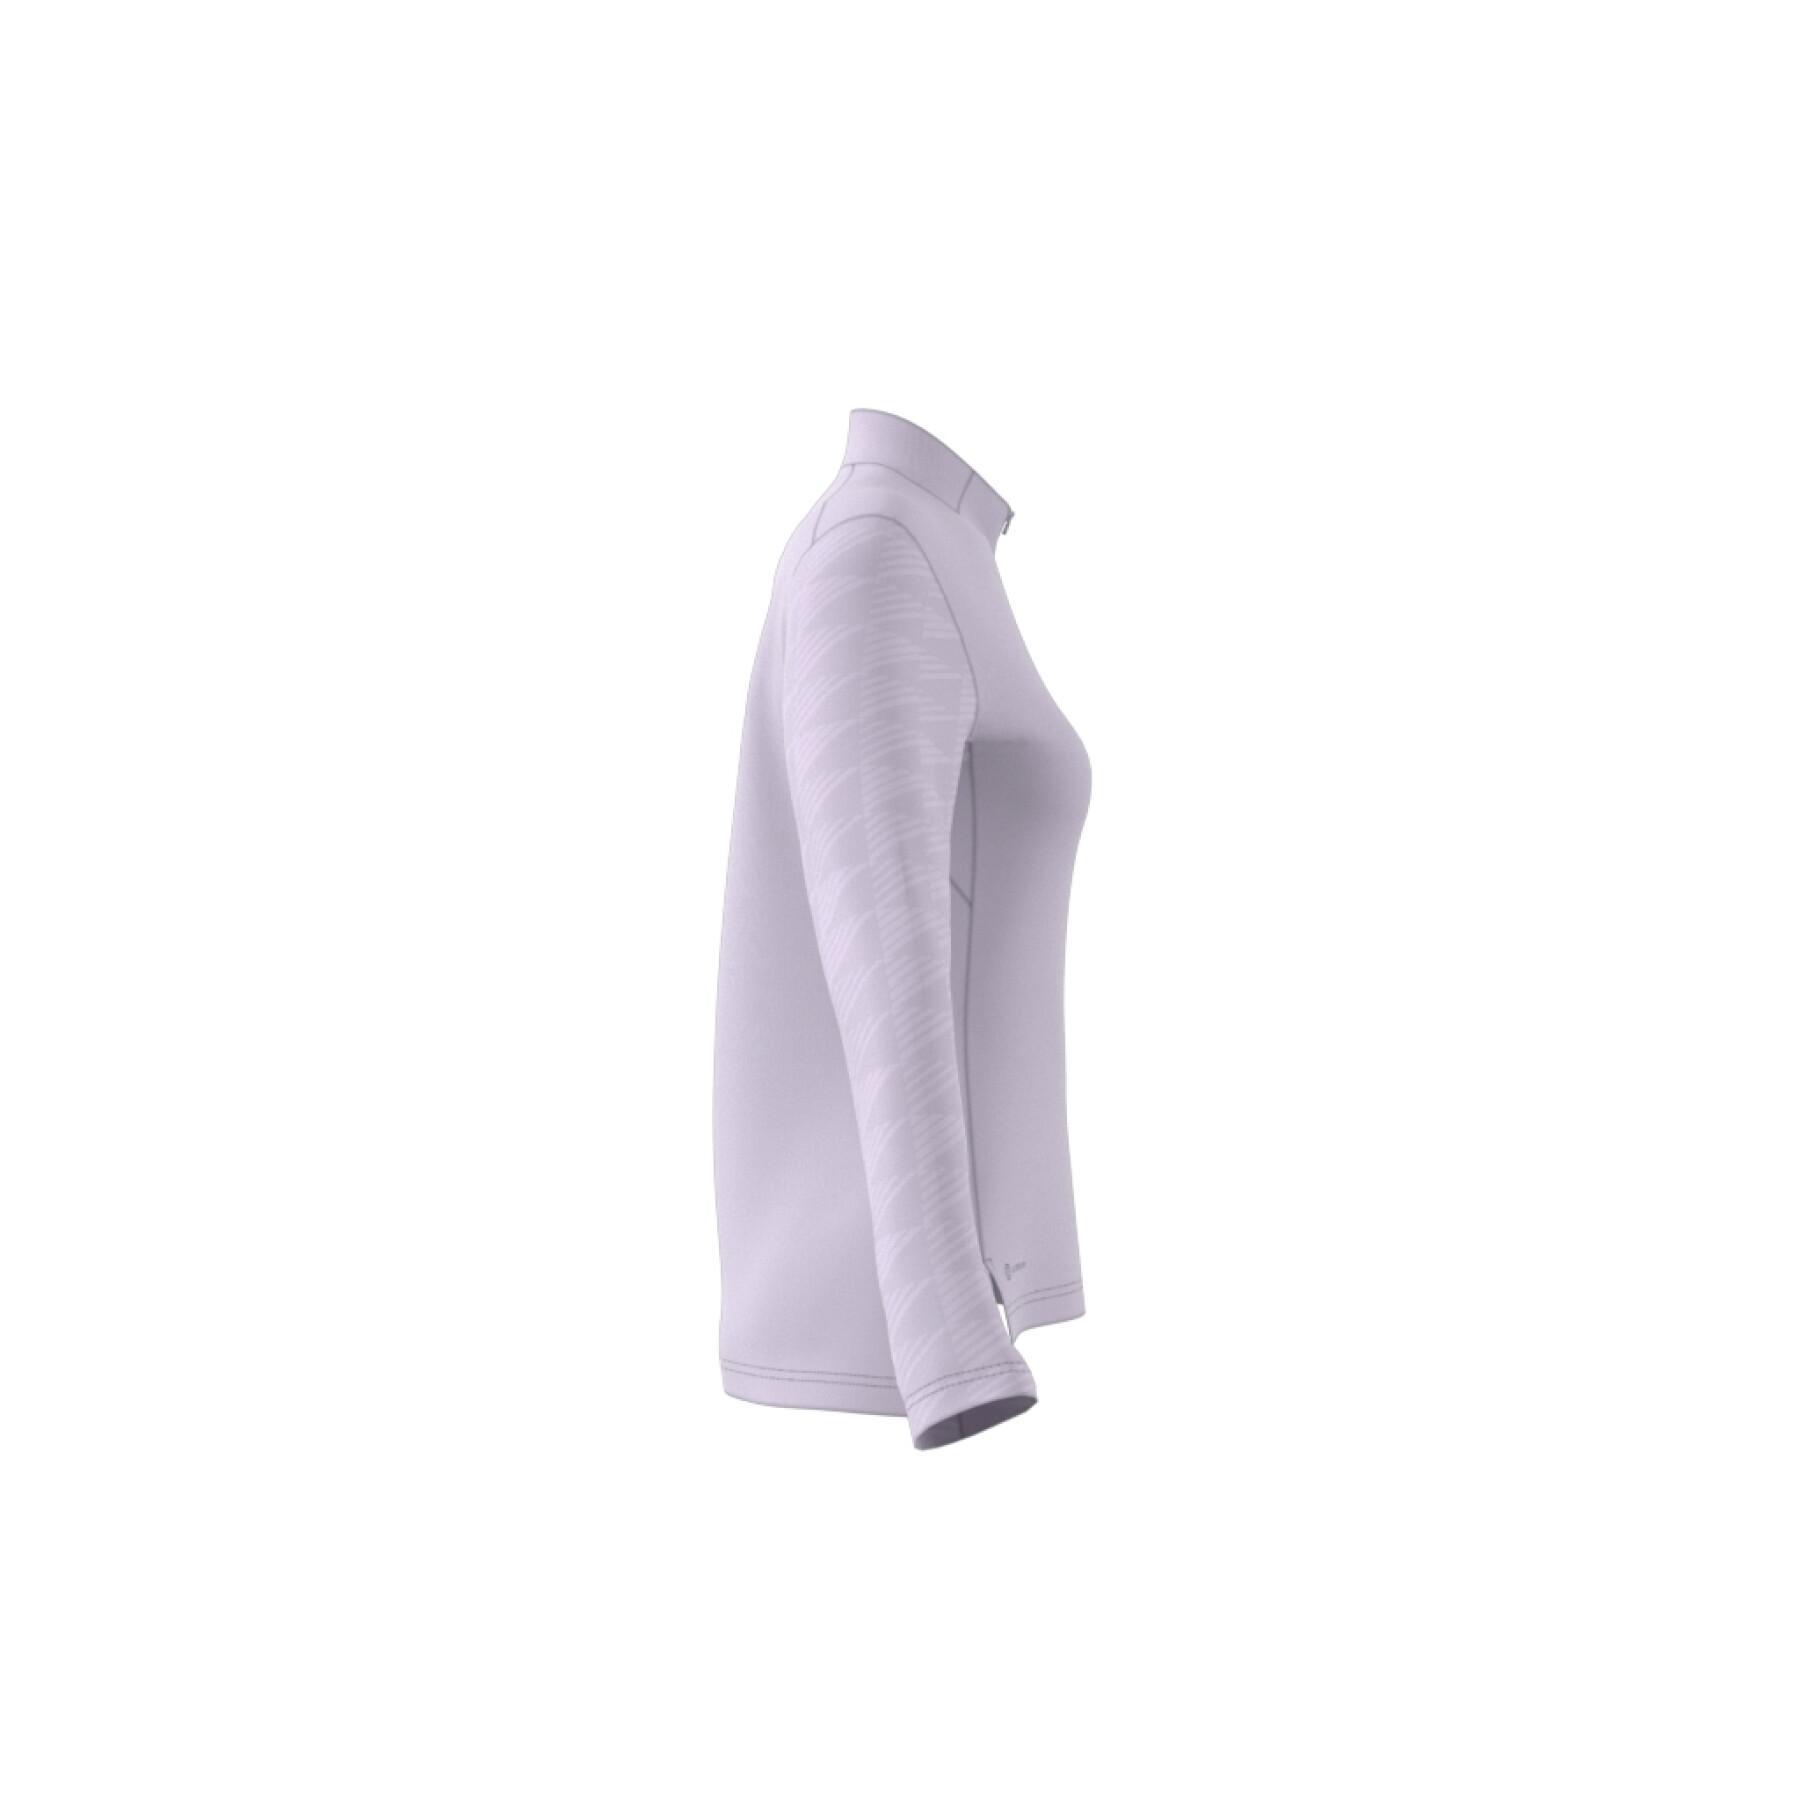 Women's 1/2 zip long sleeve jersey adidas Terrex Multi